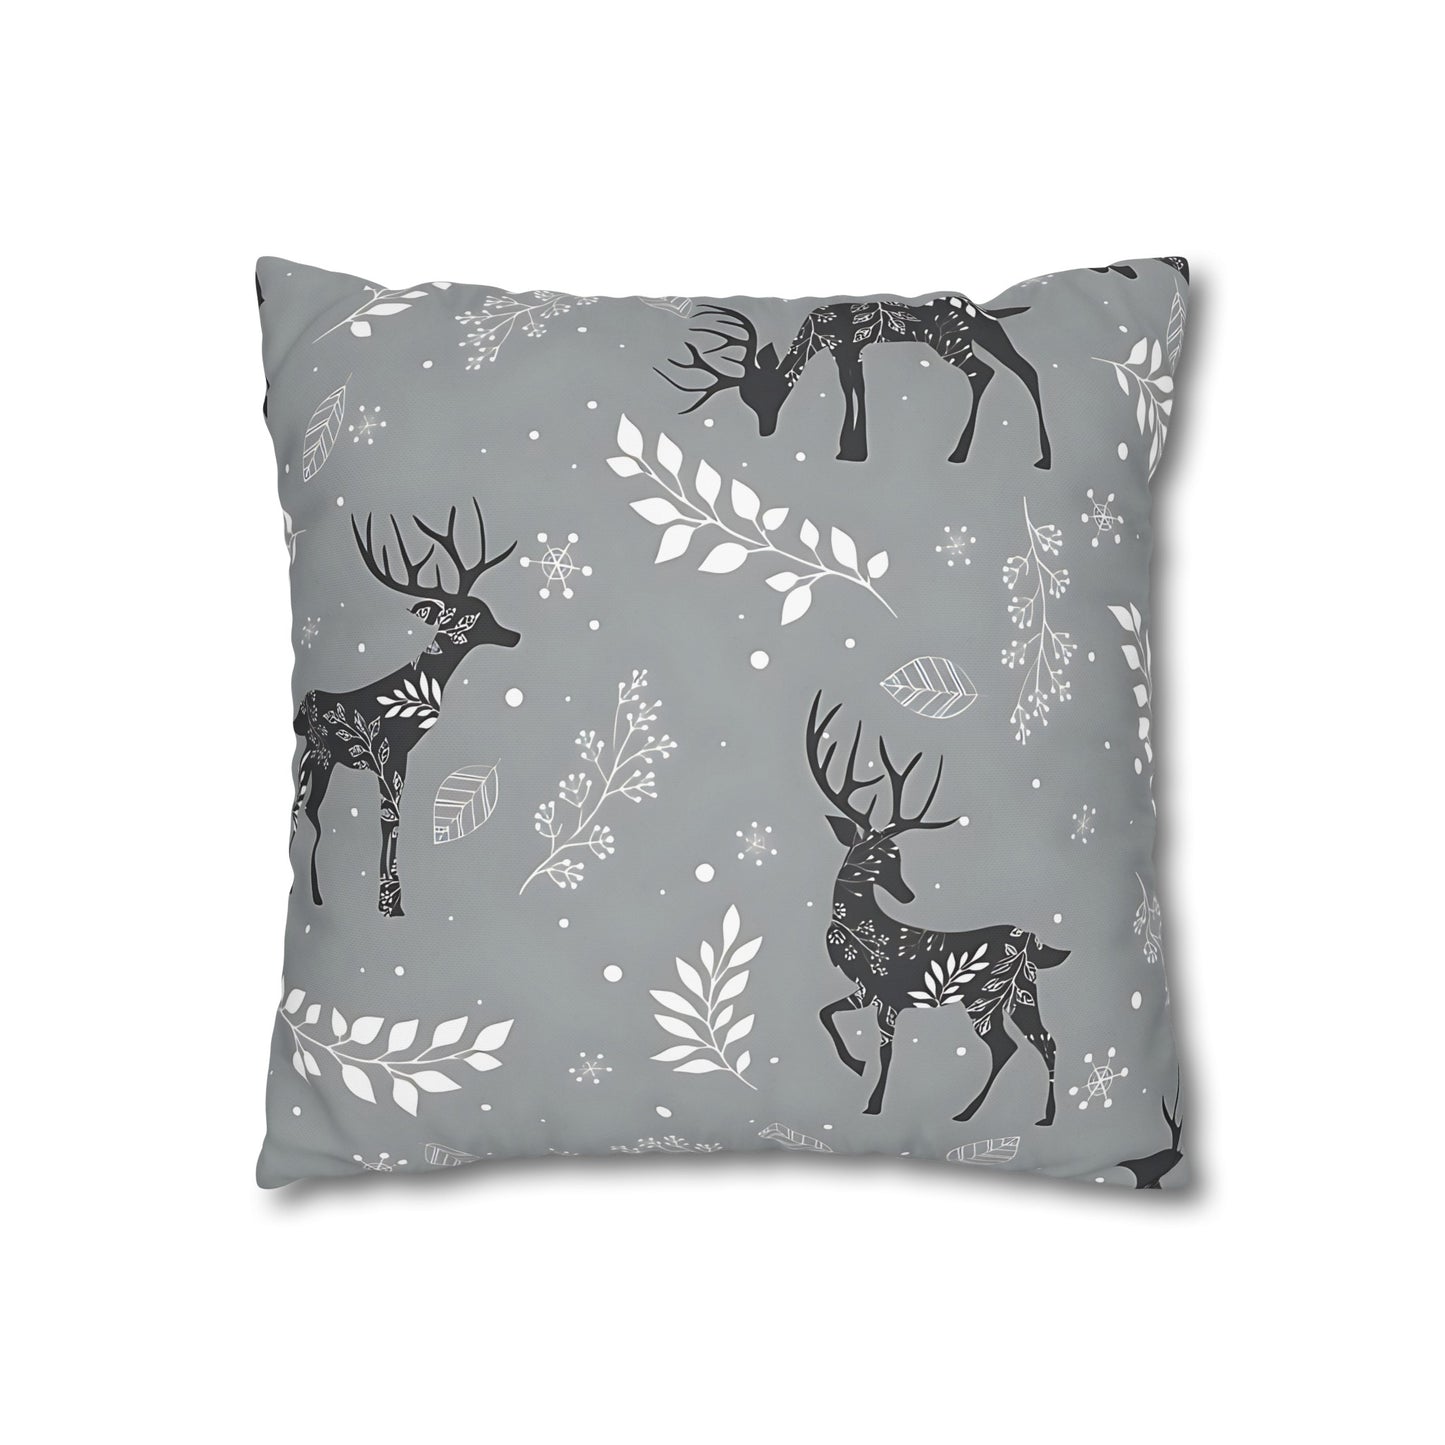 Reindeer #3 Cushion Cover